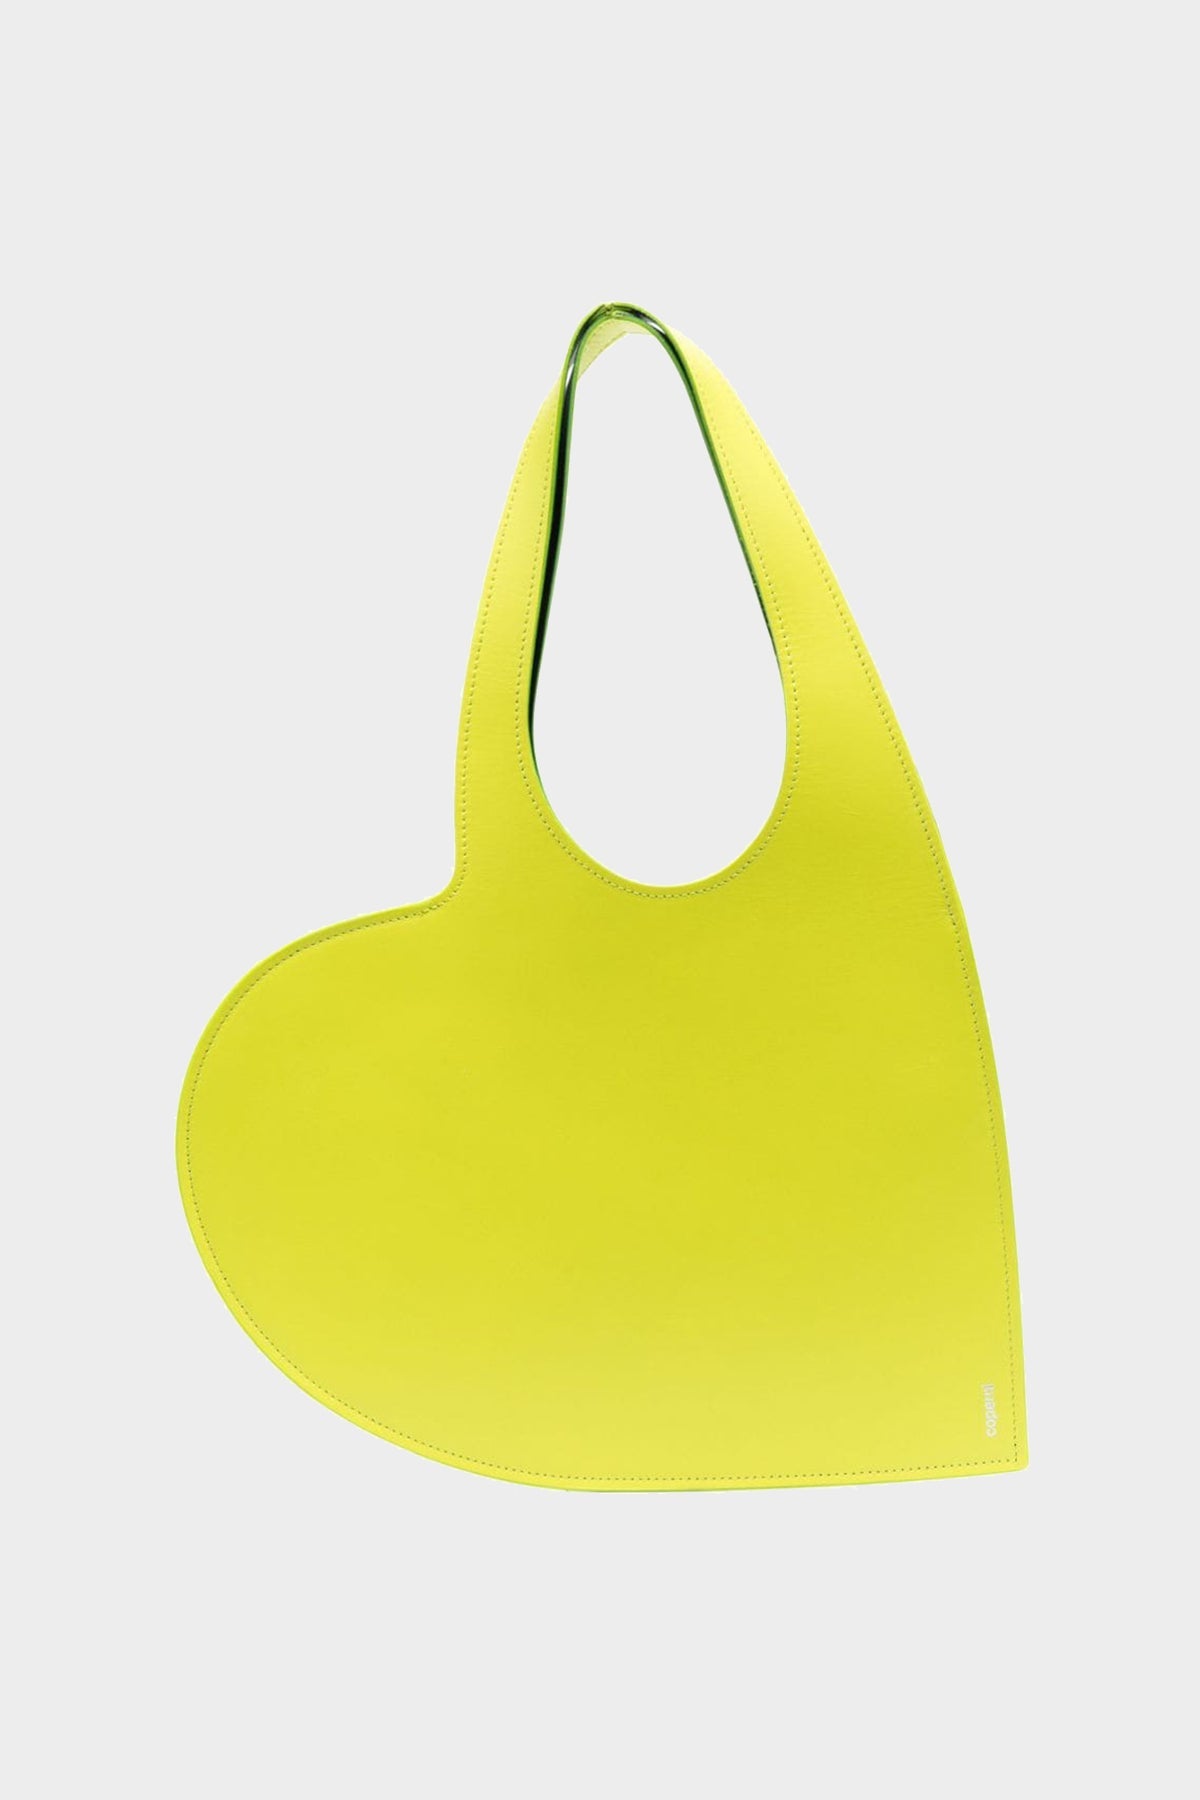 Mini Heart Tote Bag in Lime - shop-olivia.com